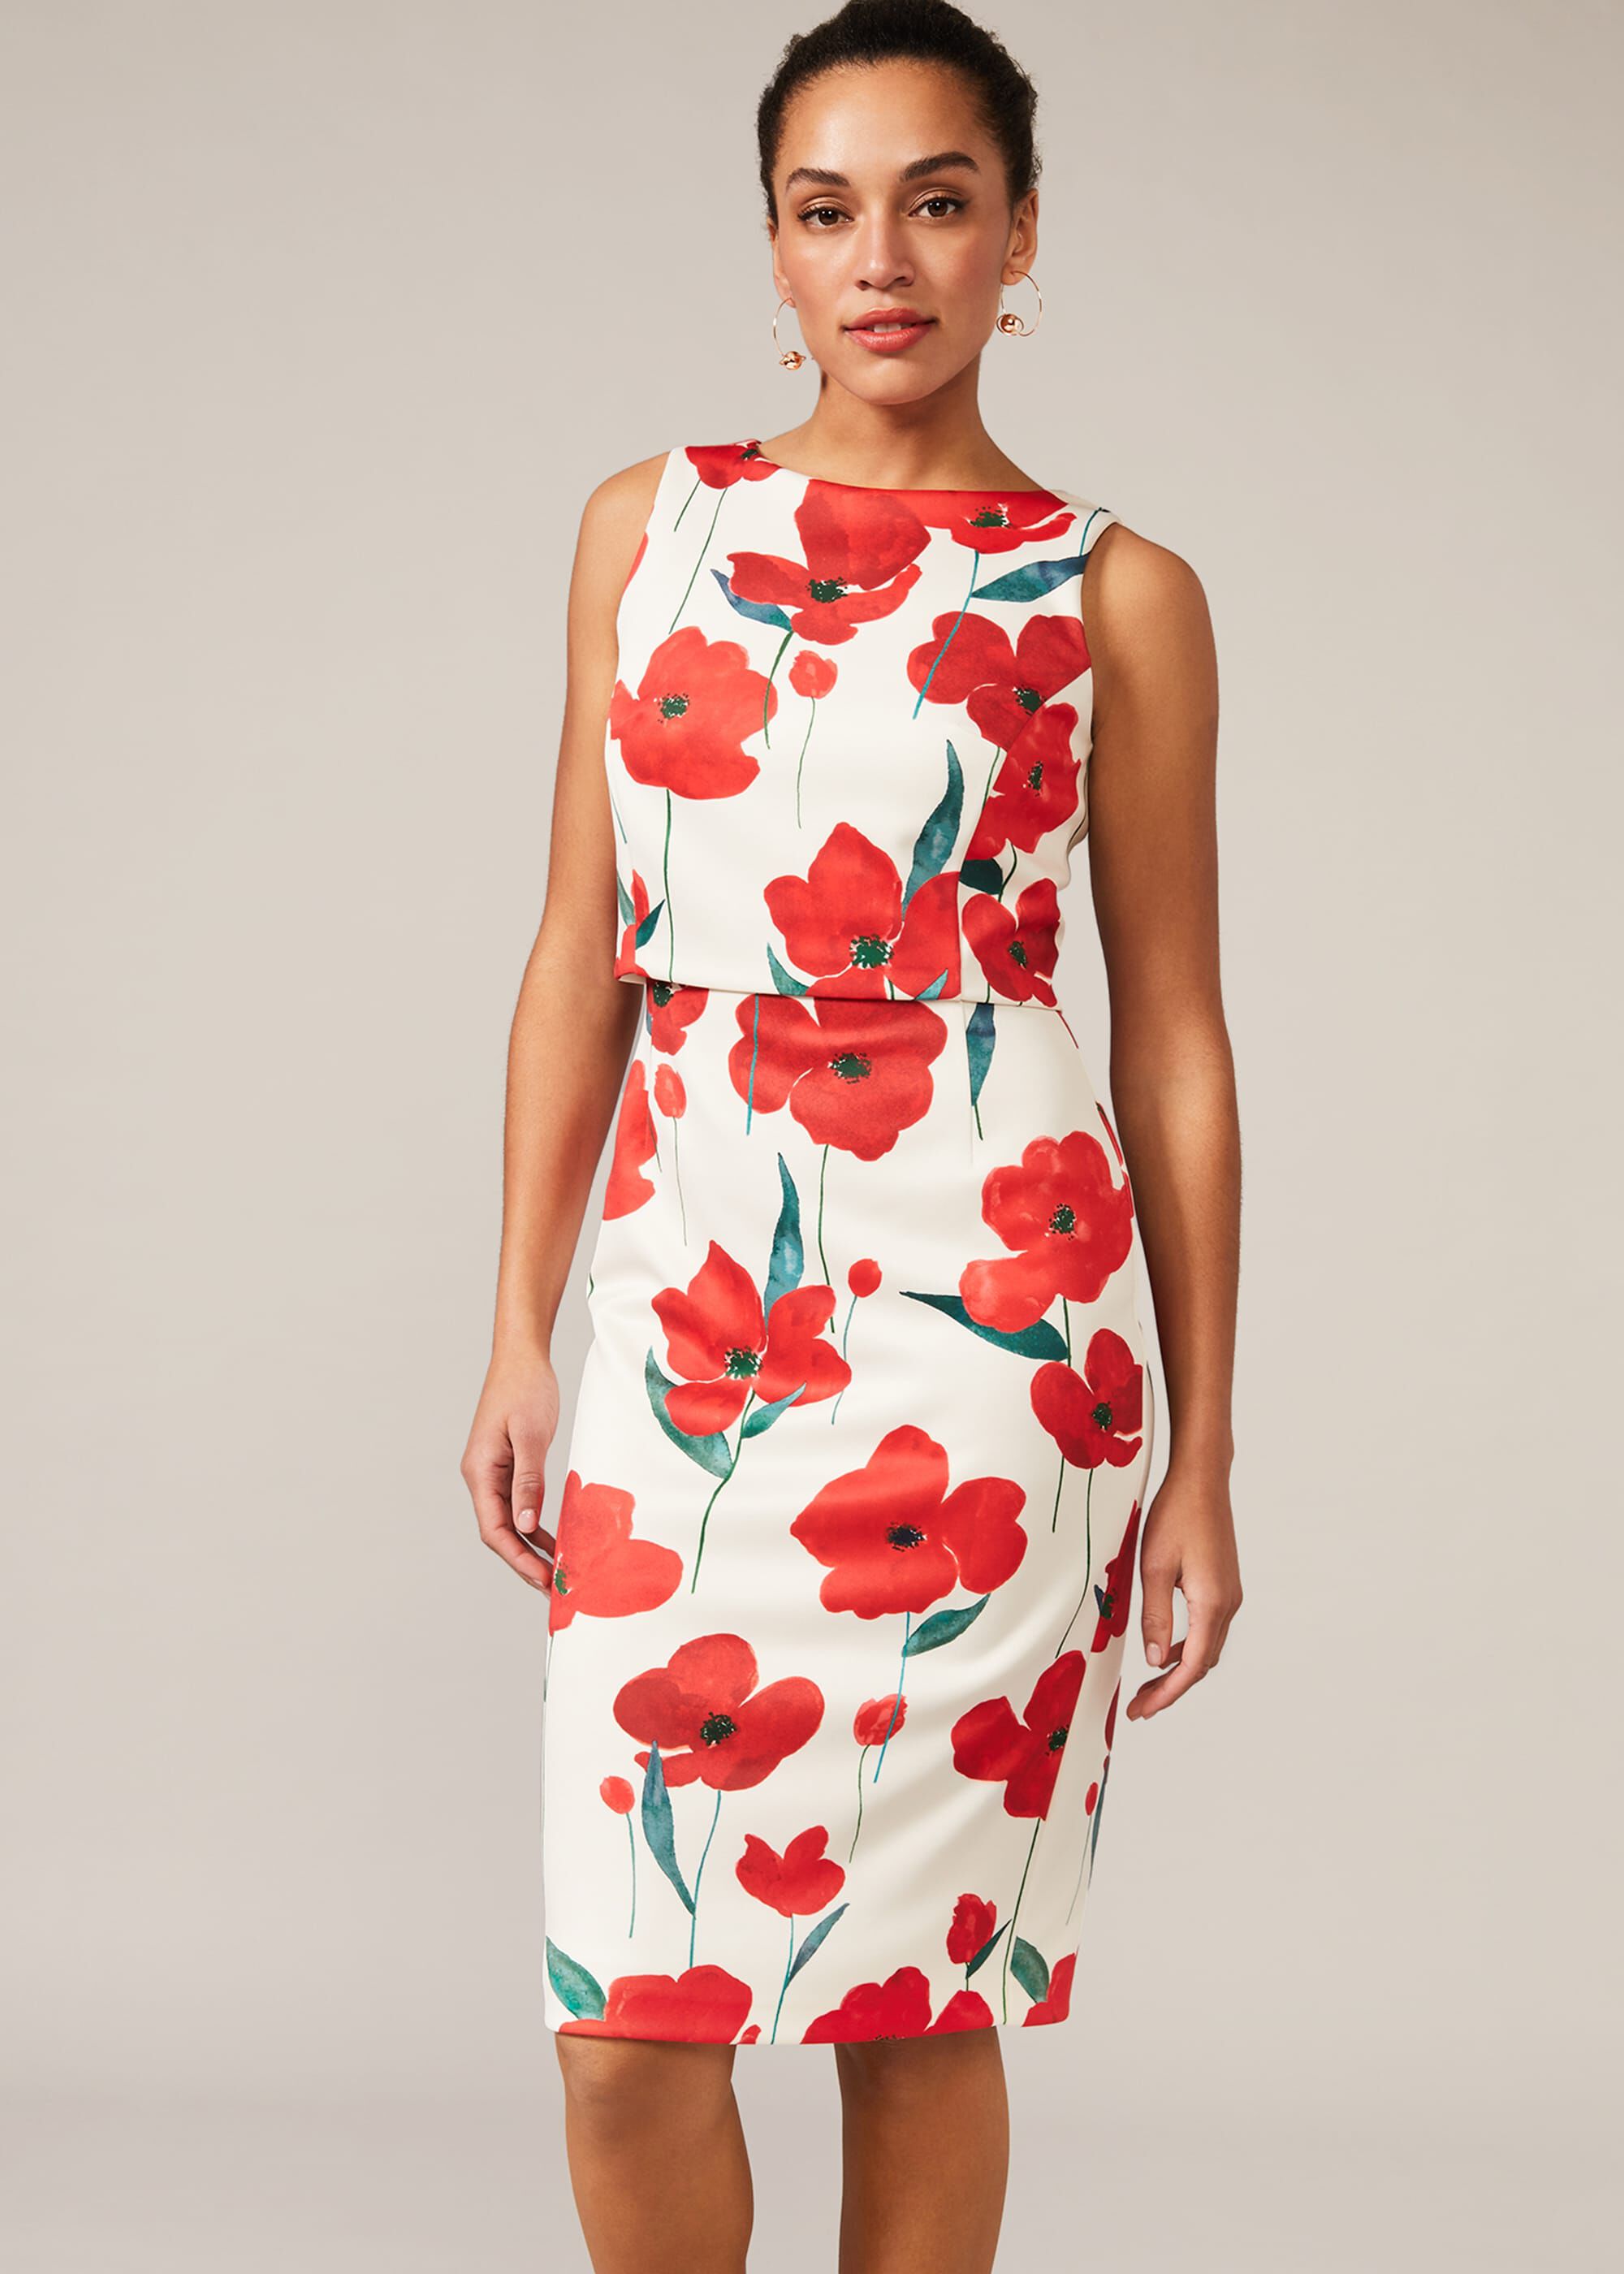 Lou-Poppy Floral Scuba Dress | Phase Eight